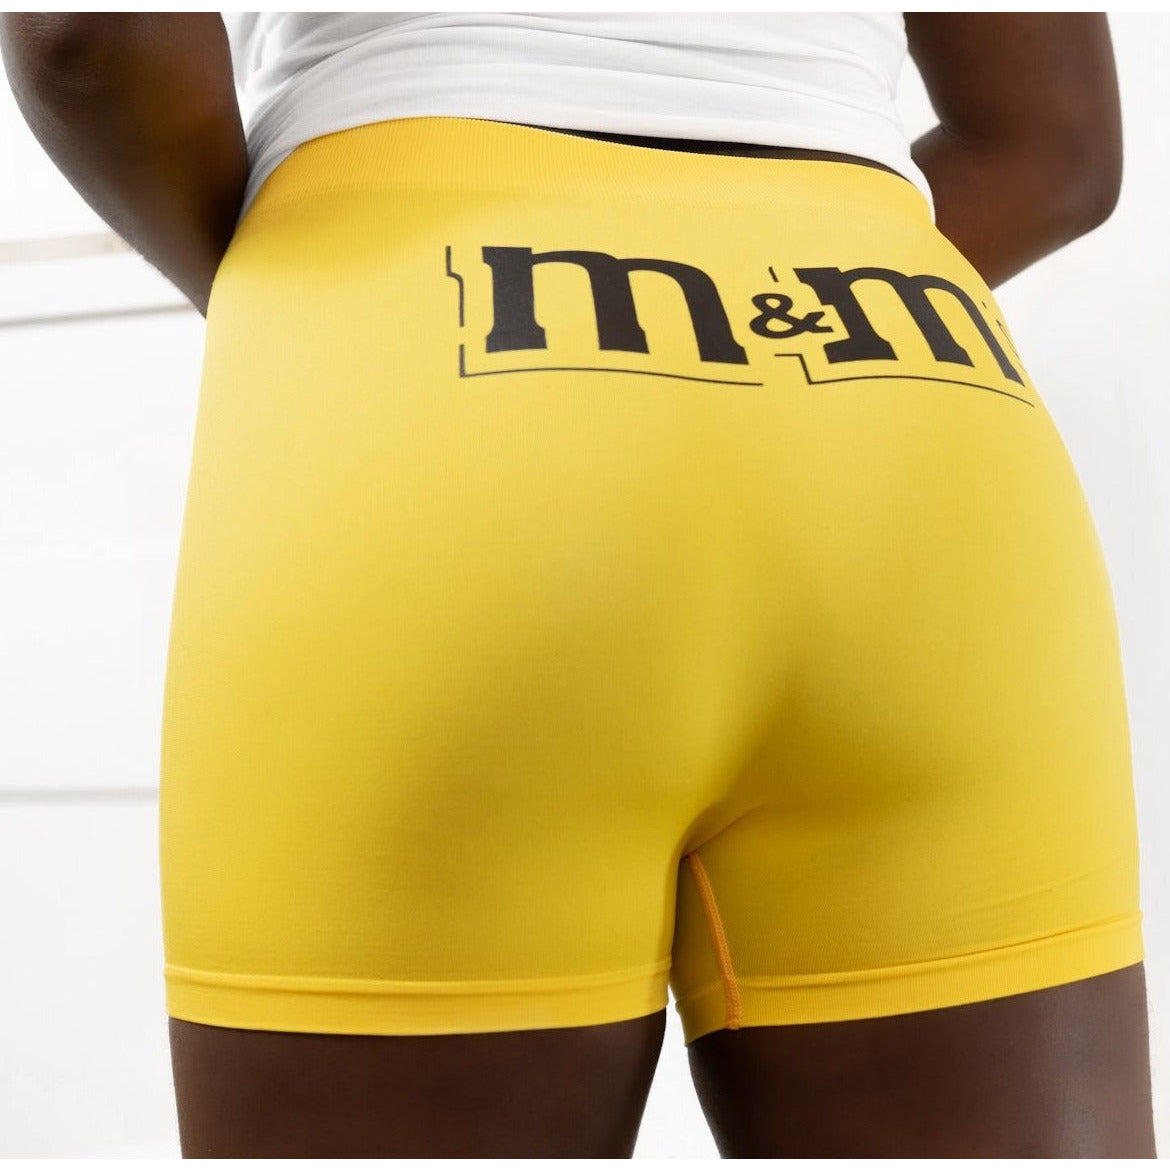 Women’s M&M Biker Shorts